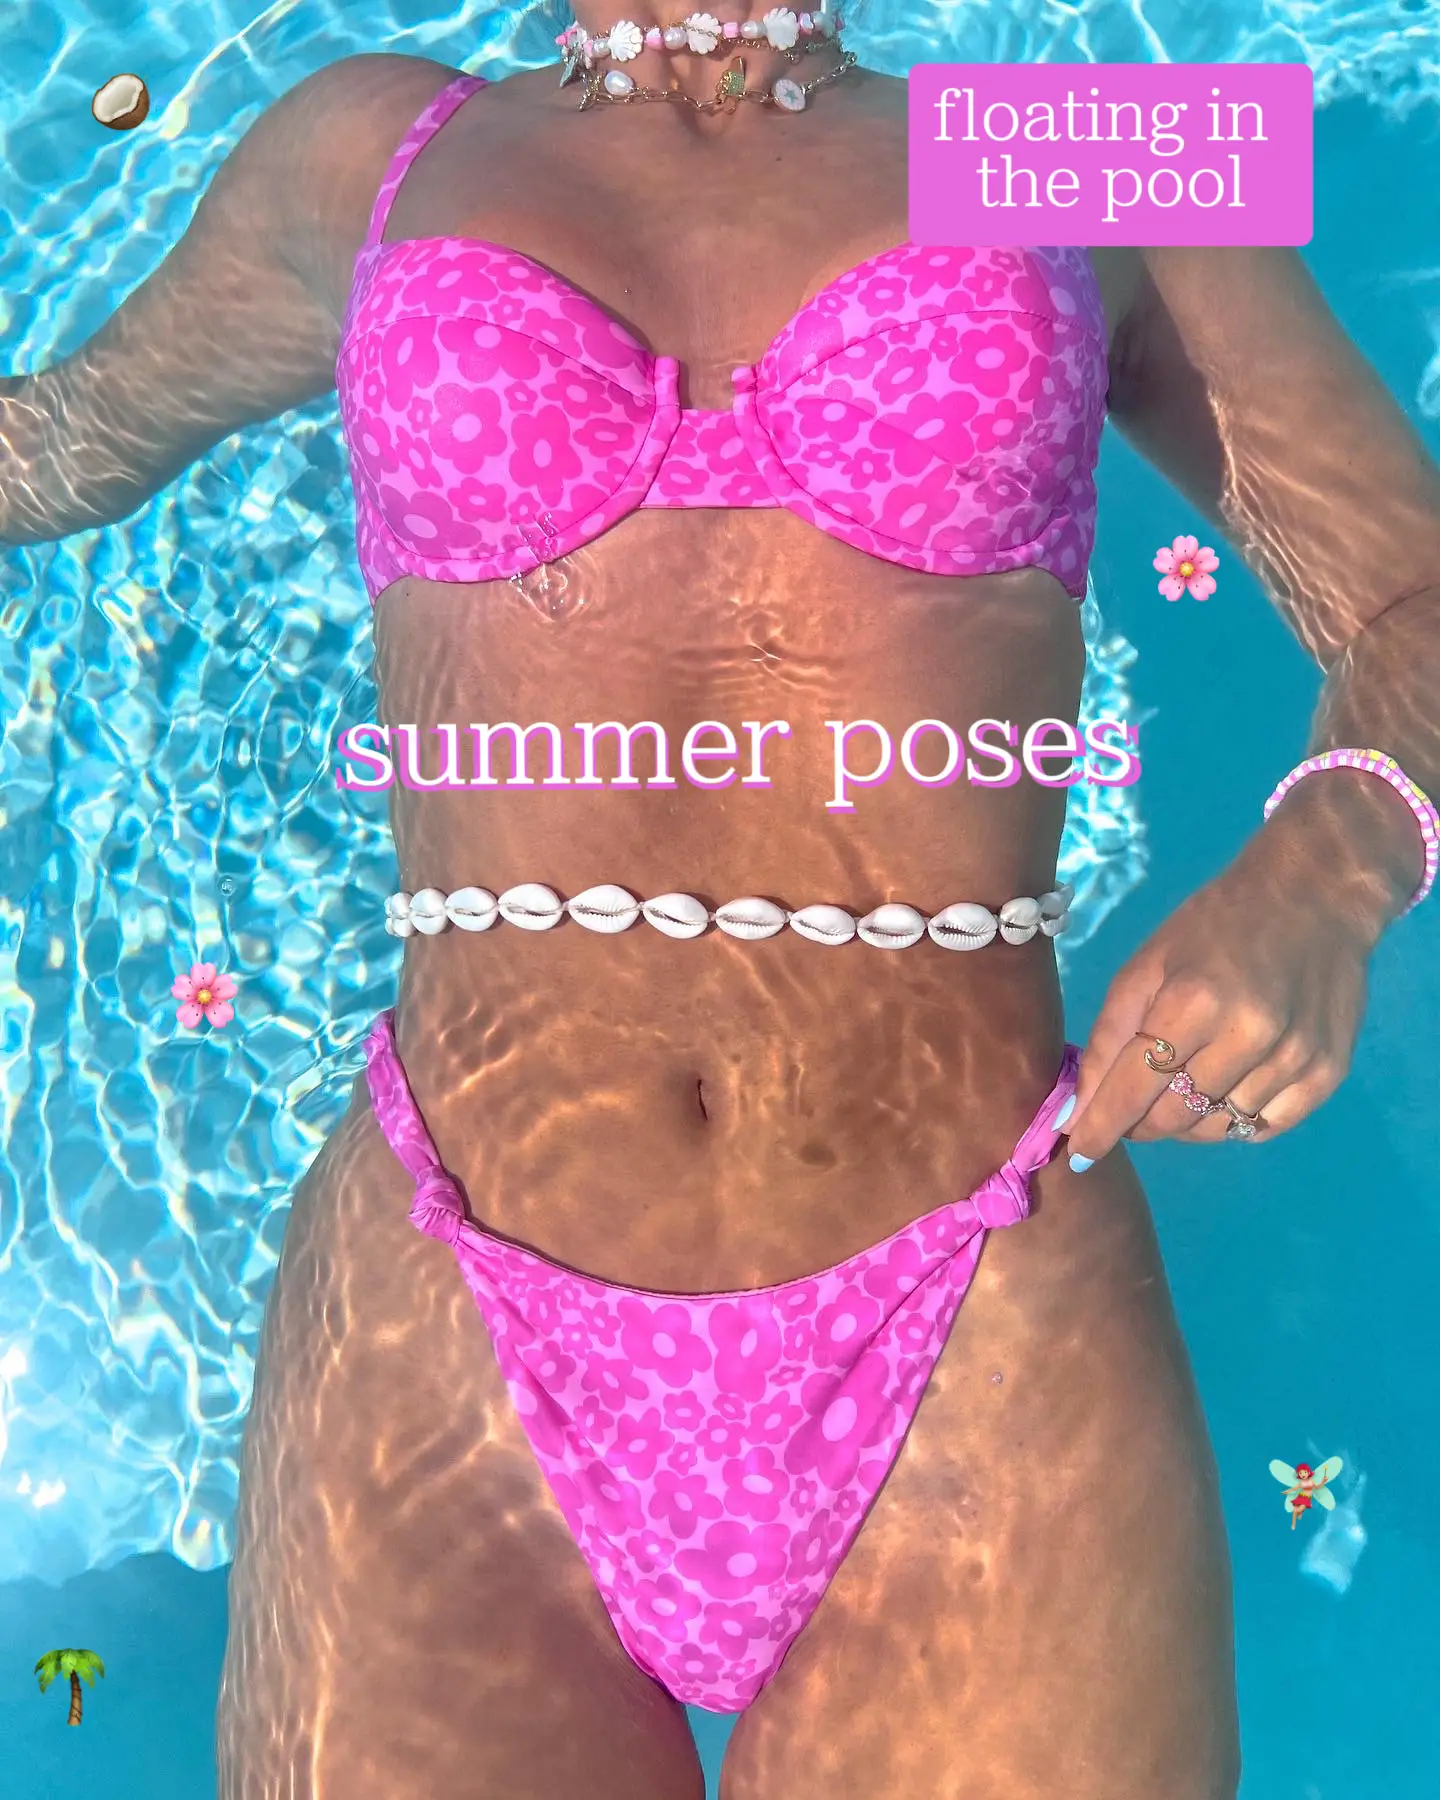  A woman wearing a pink bikini is floating in the pool.